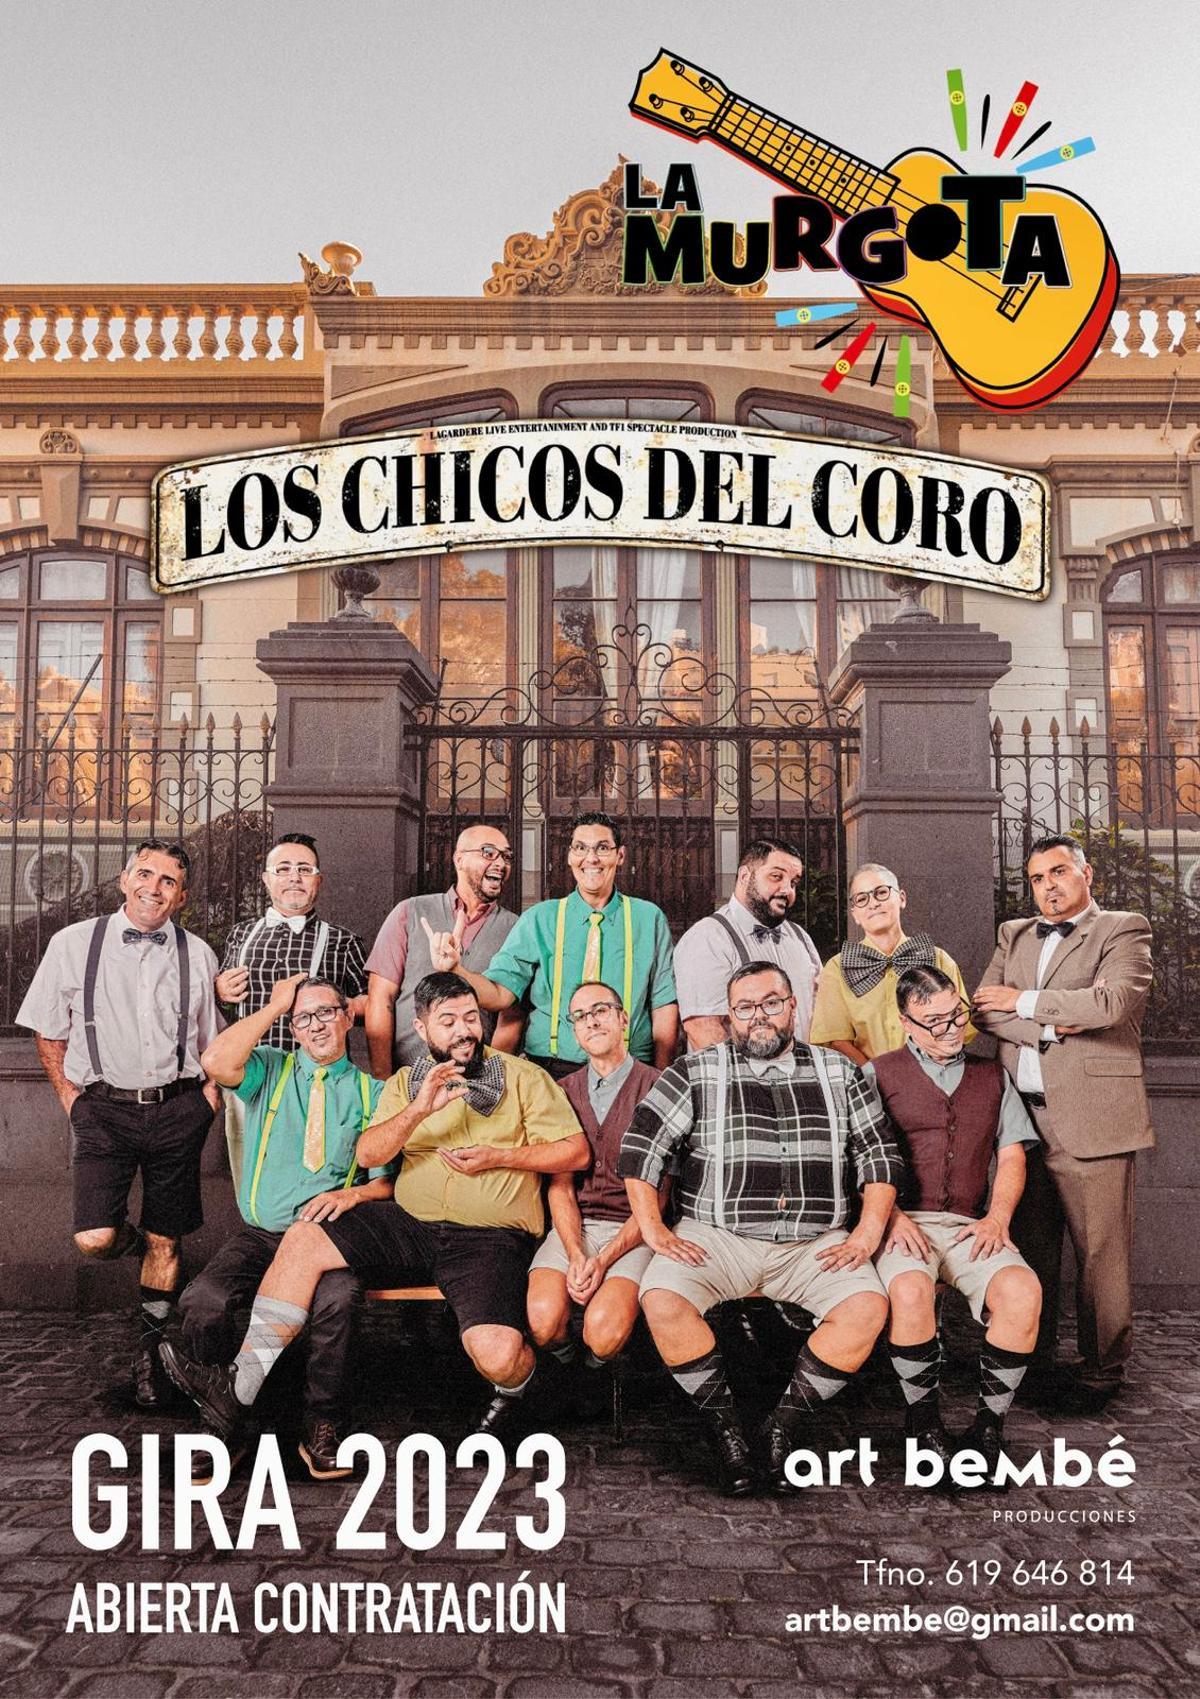 Cartel promocional de La Murgota.